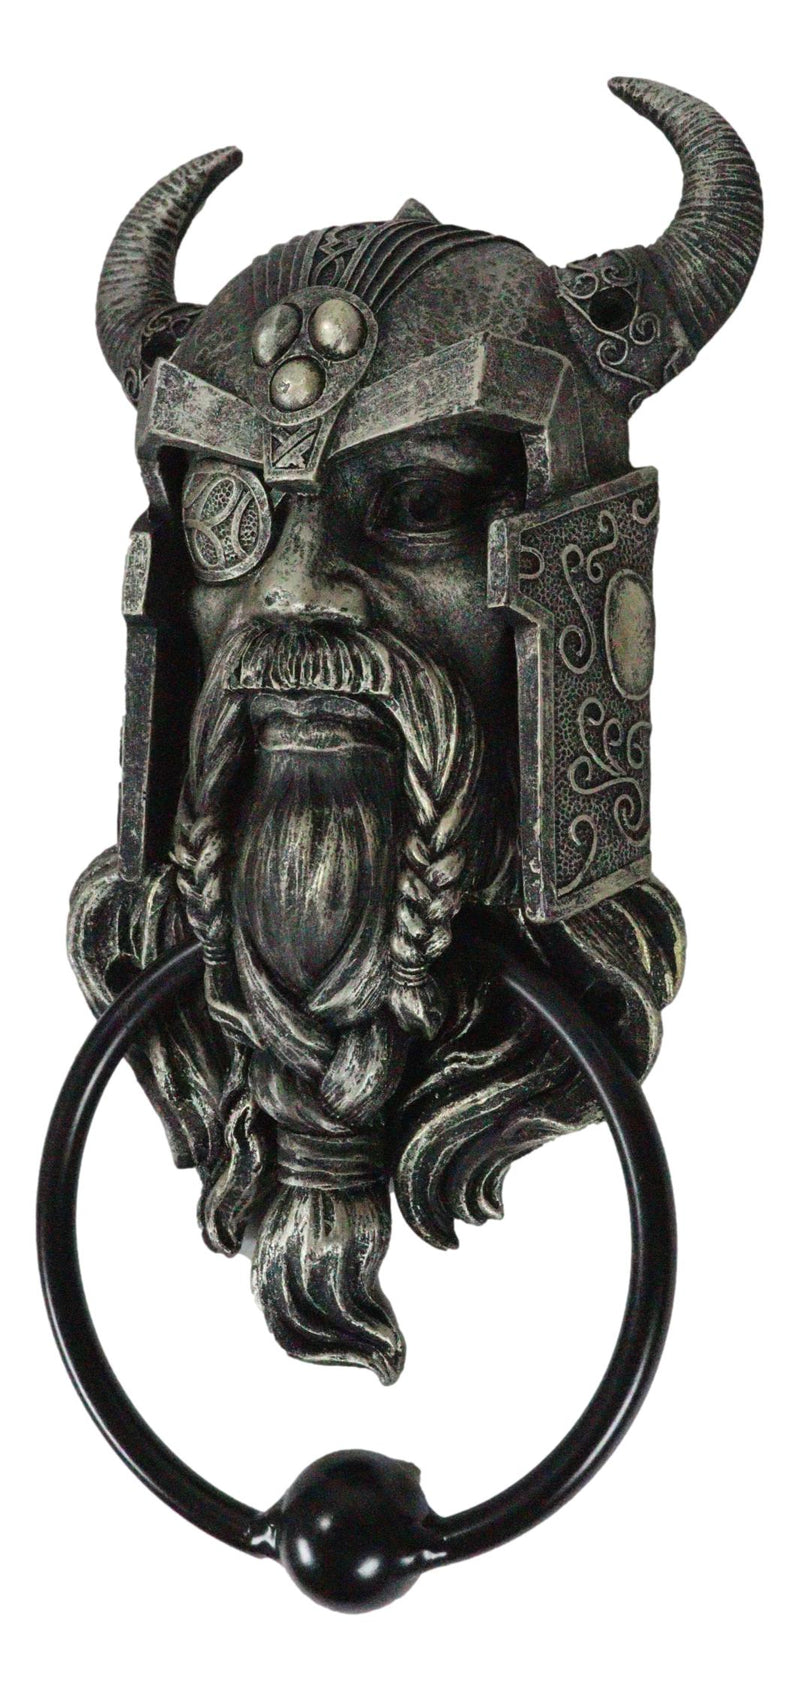 Ruler of Asgard Warrior Raven God Odin The Alfather Decorative Door Knocker